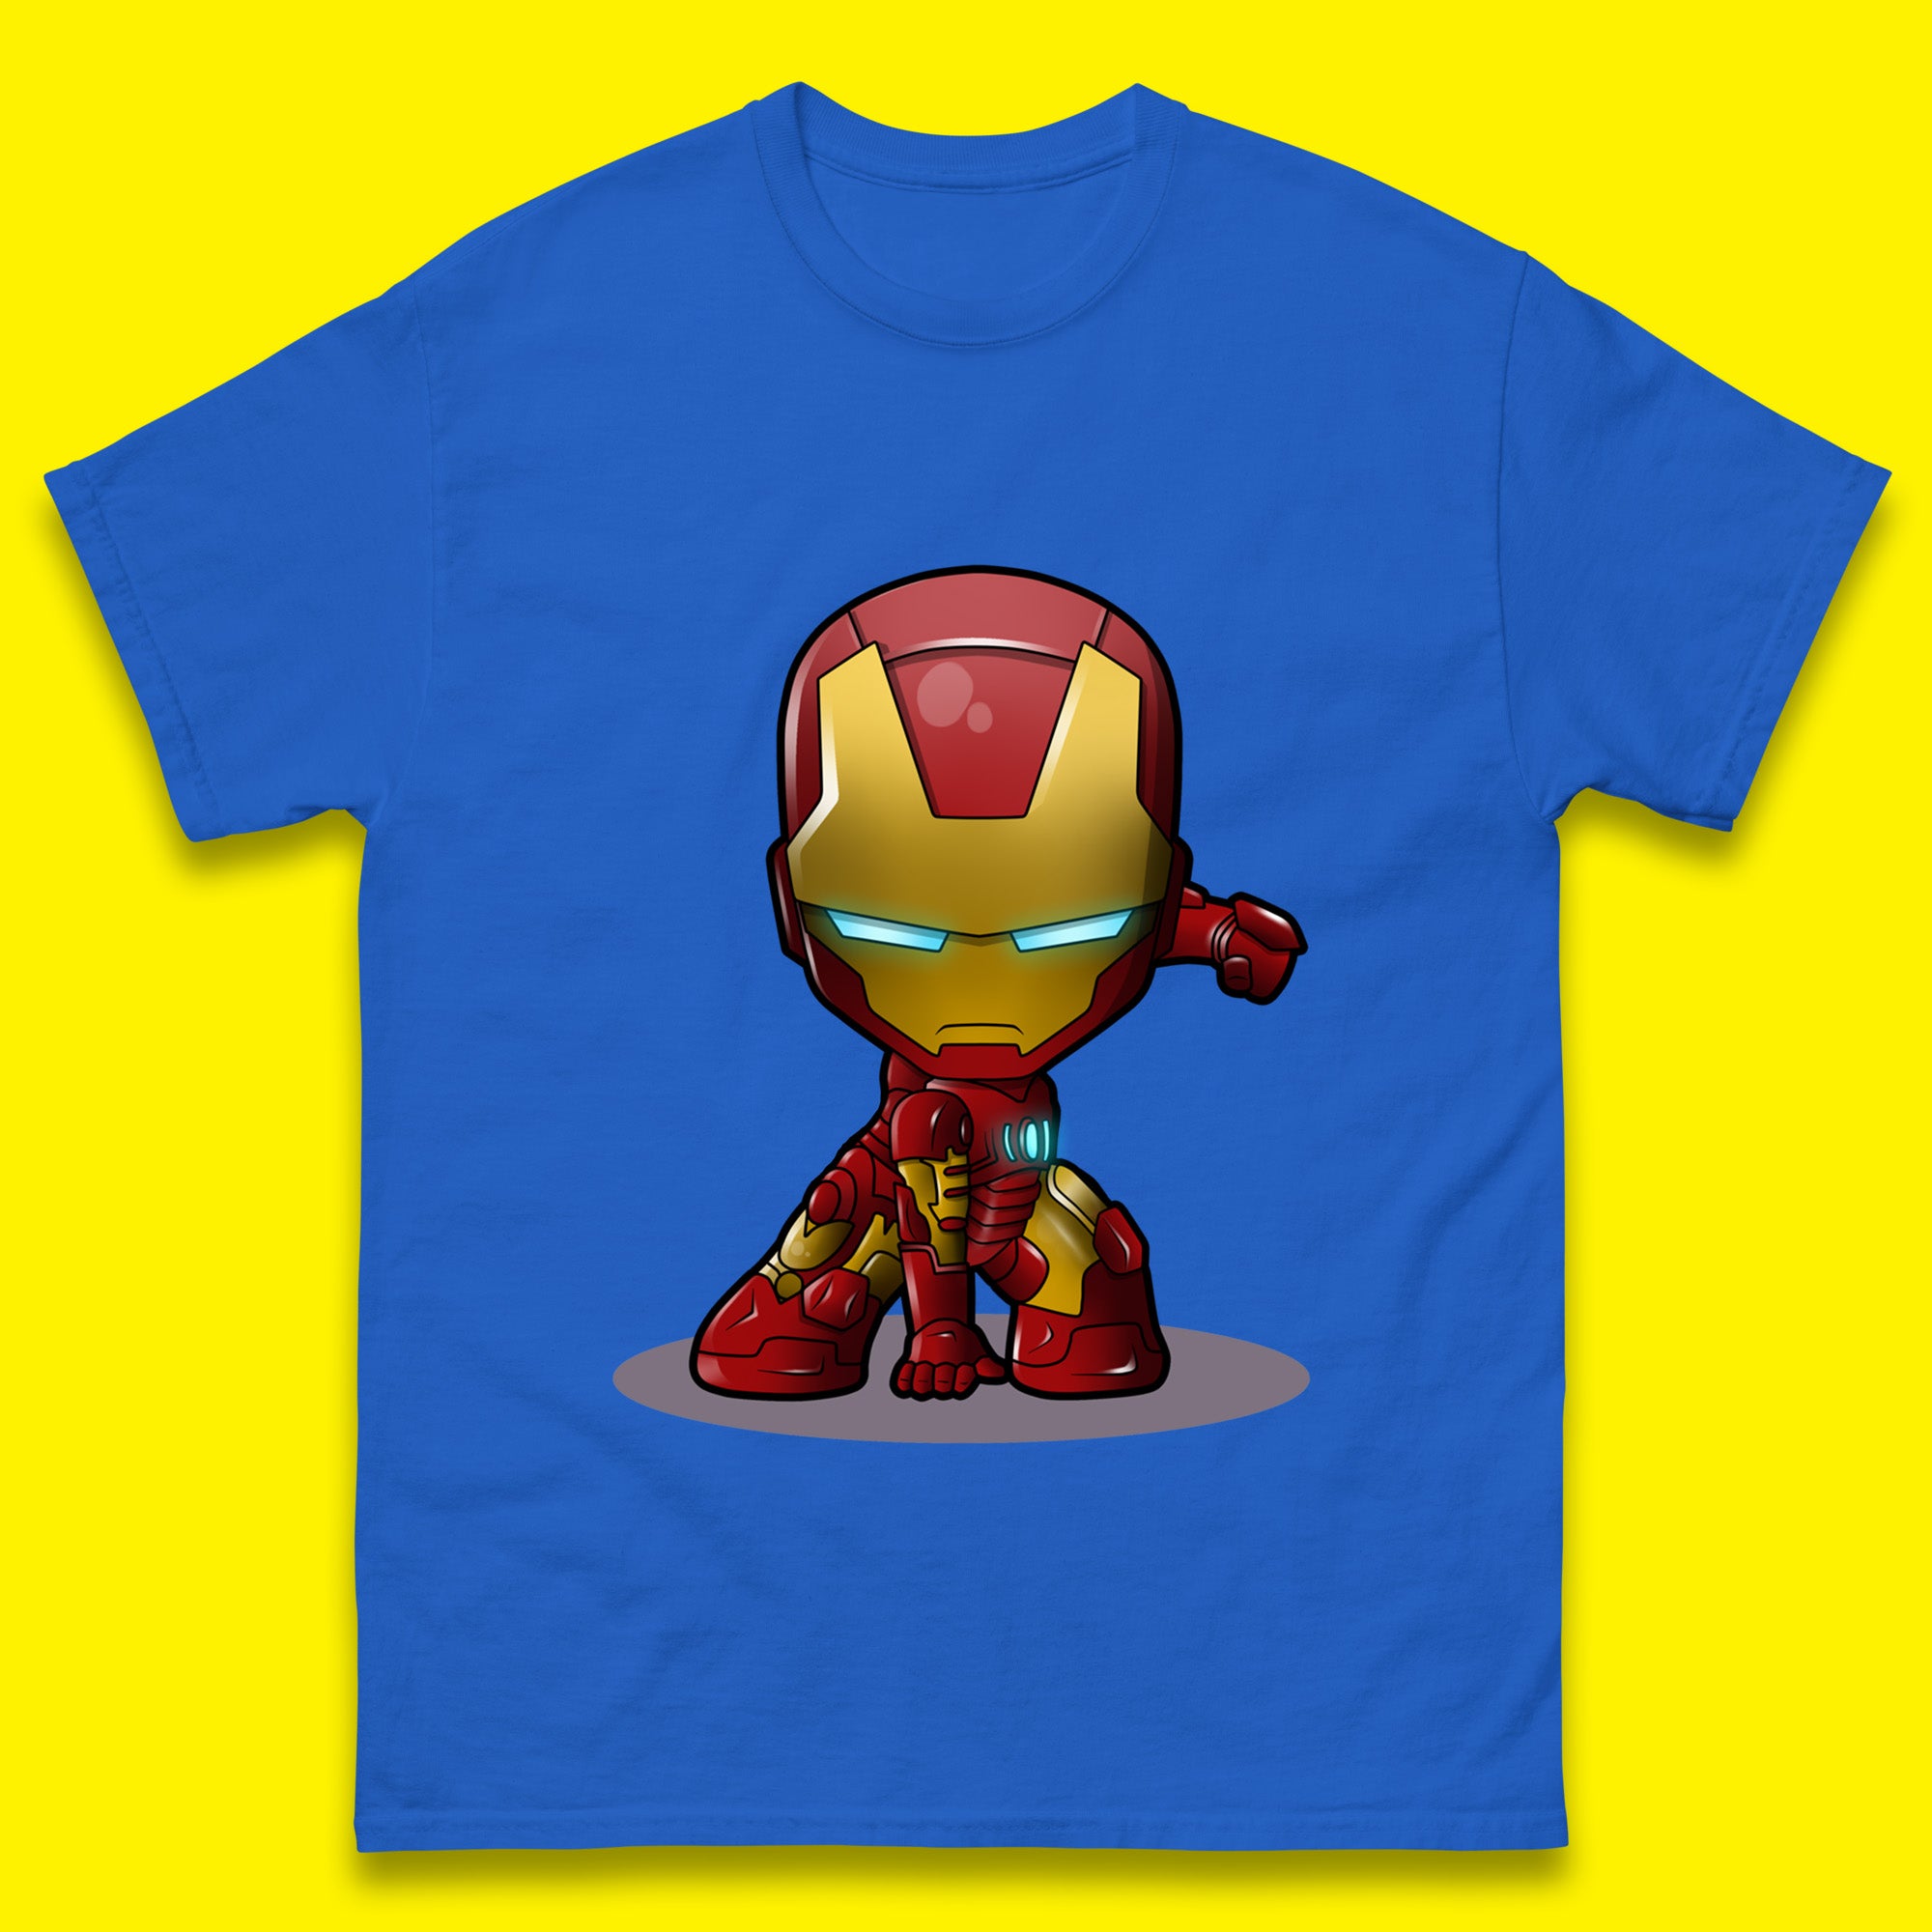 Marvel Avenger Iron Man Movie Character Ironman Costume Superhero Marvel Comics Mens Tee Top